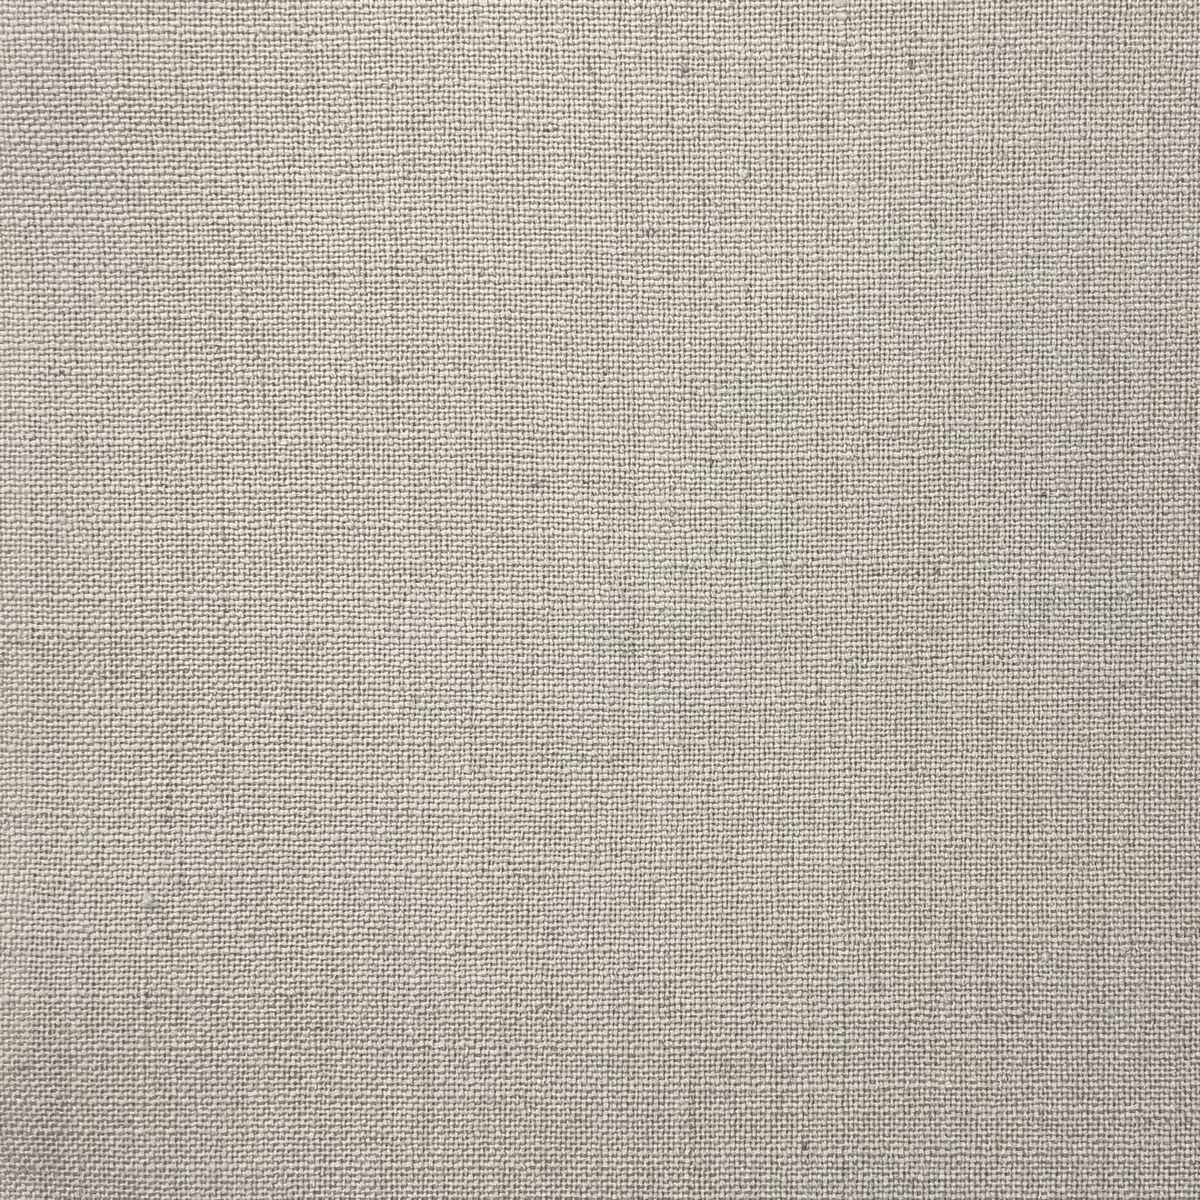 Linum Flan Fabric by Chatham Glyn